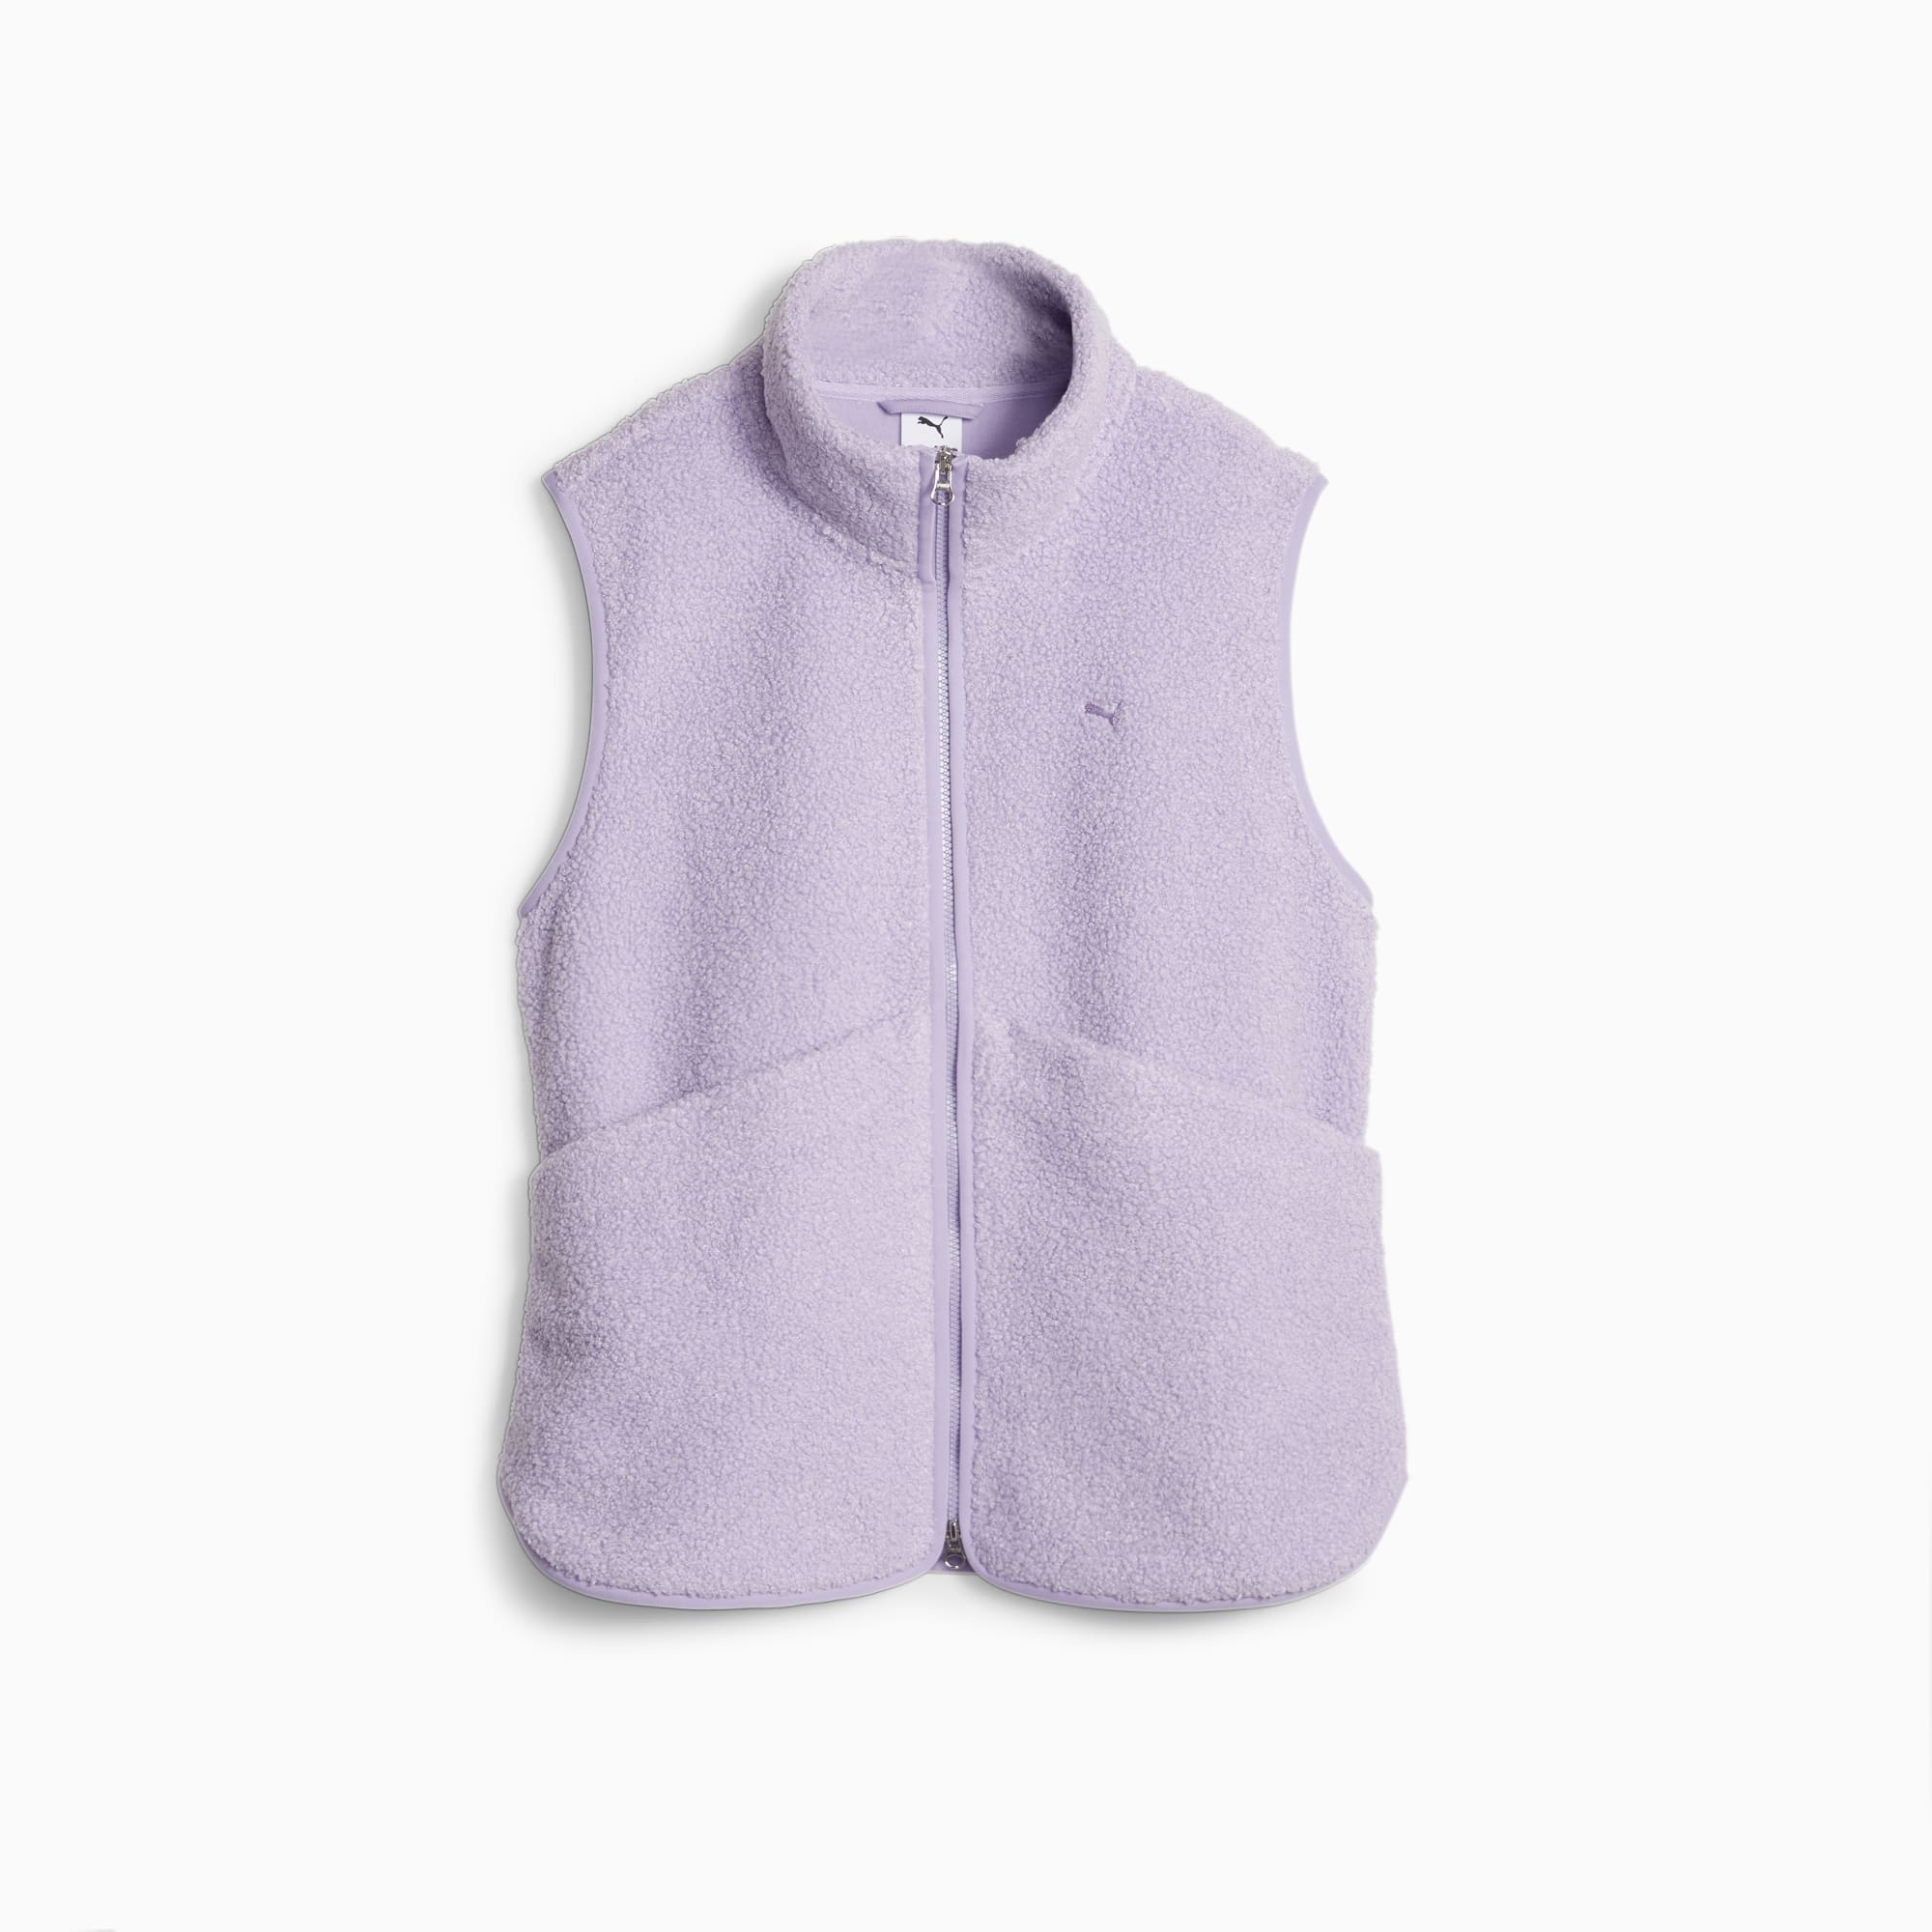 PUMA Yona Women's Fleece Vest Women's Jacket, Vivid Viola, Size XS, Clothing